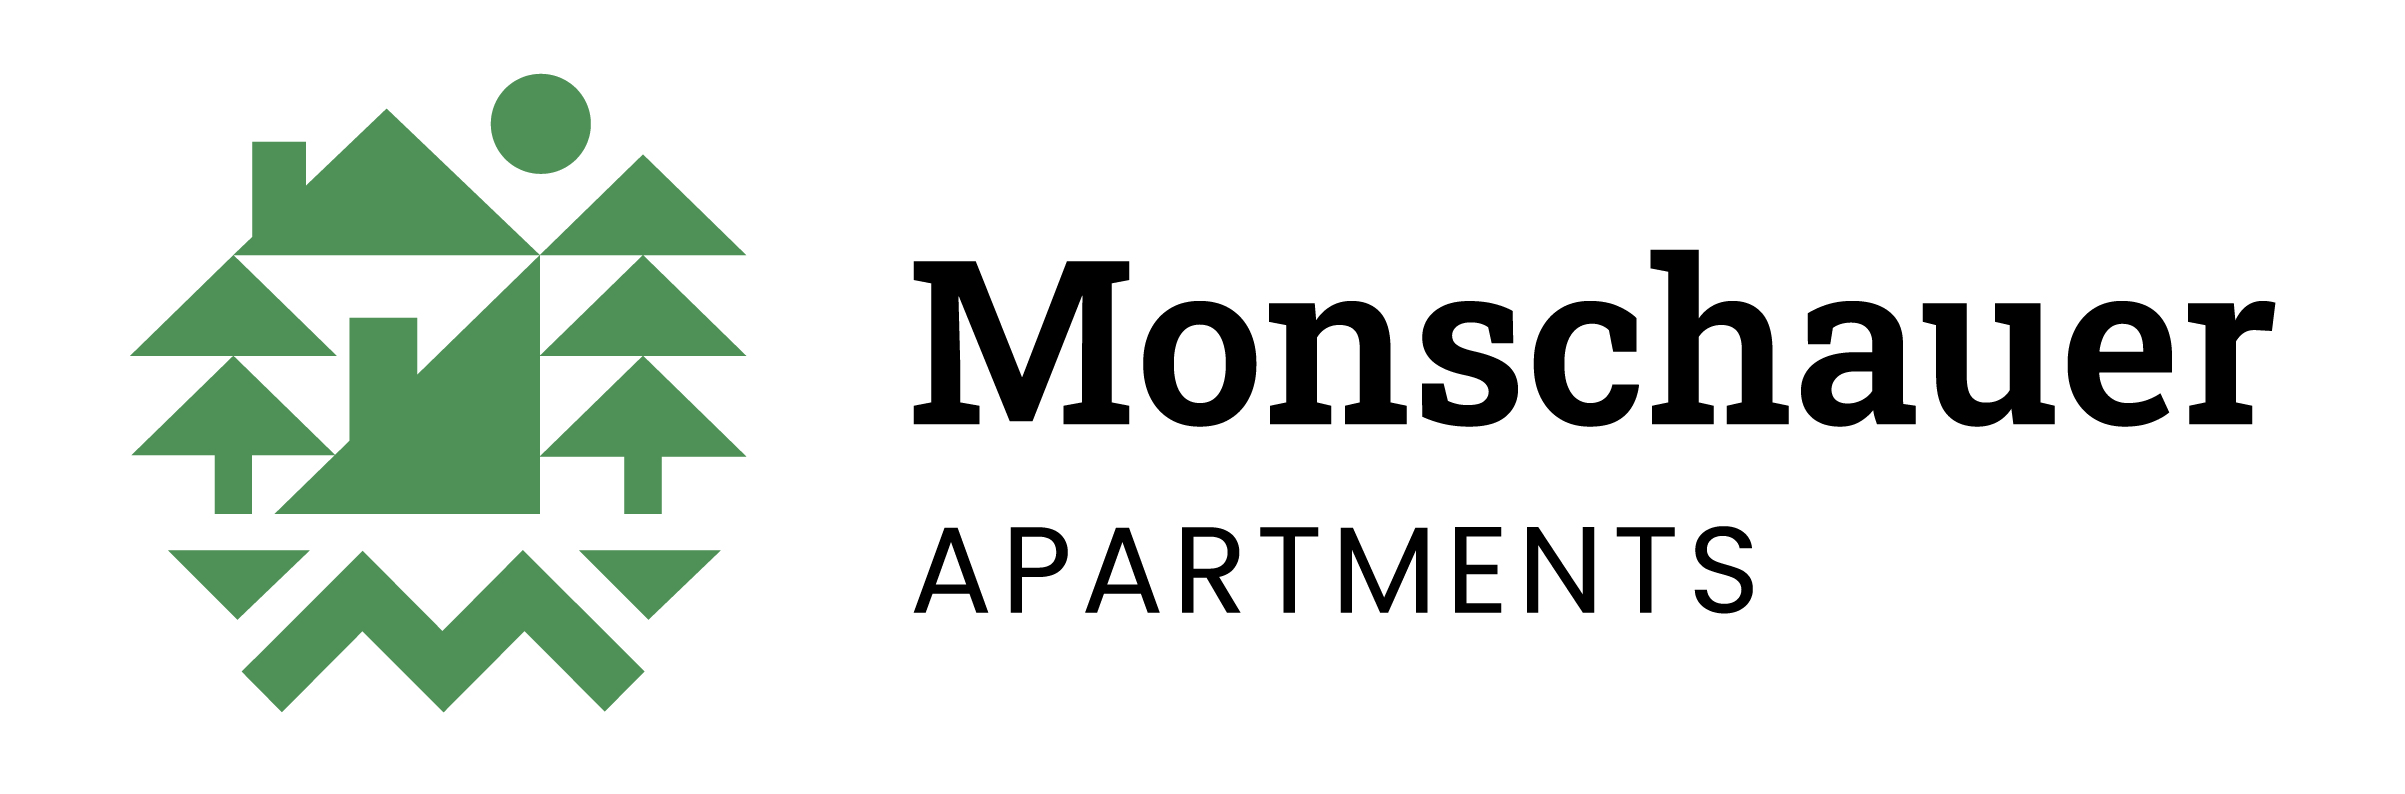 Monschauer Apartments